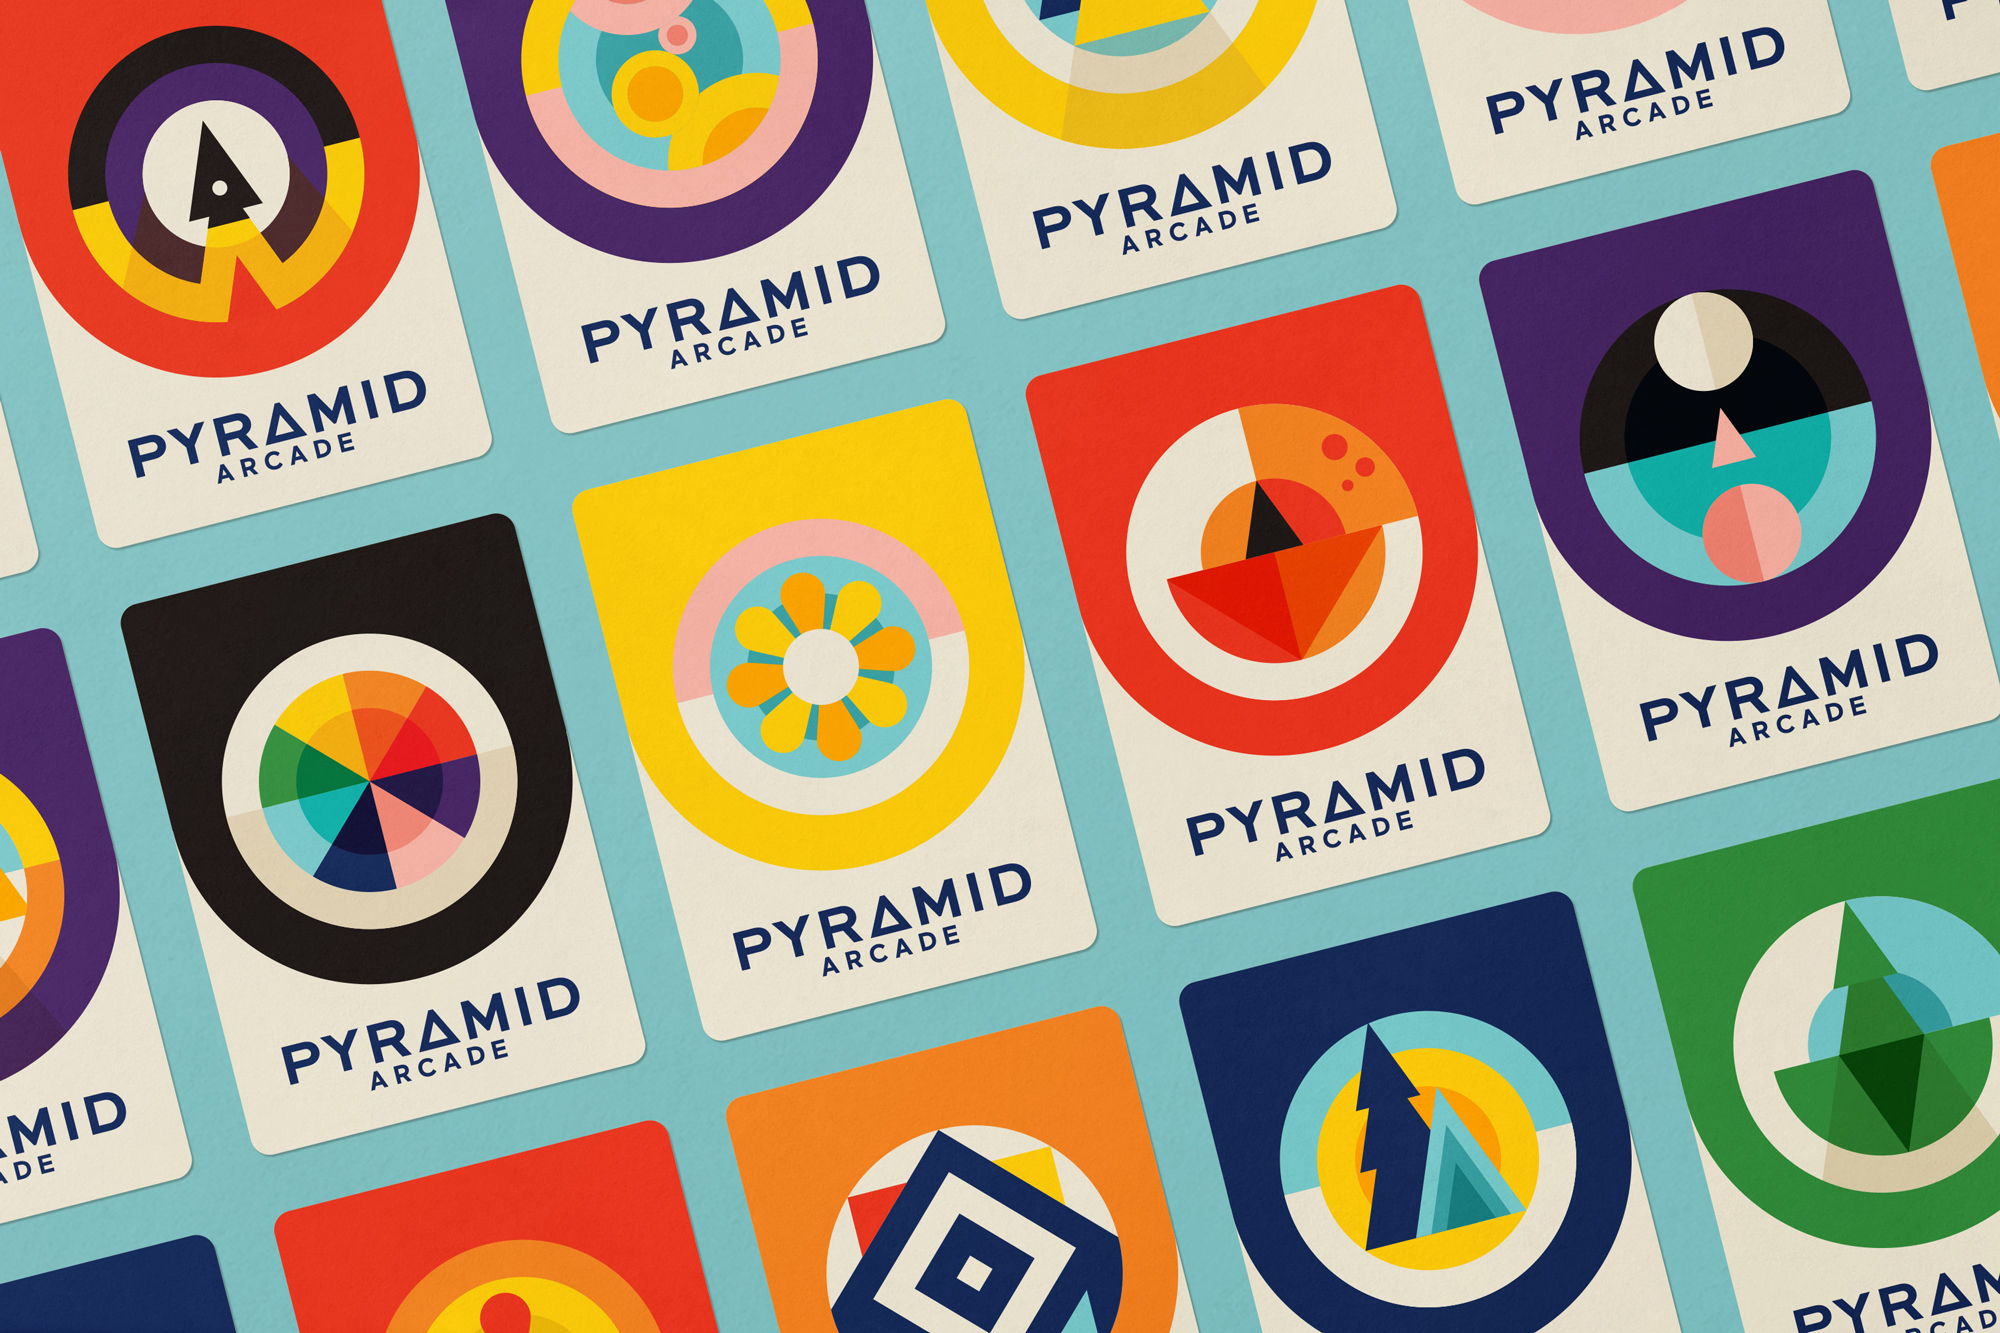 Pyramid_Arcade_Cards